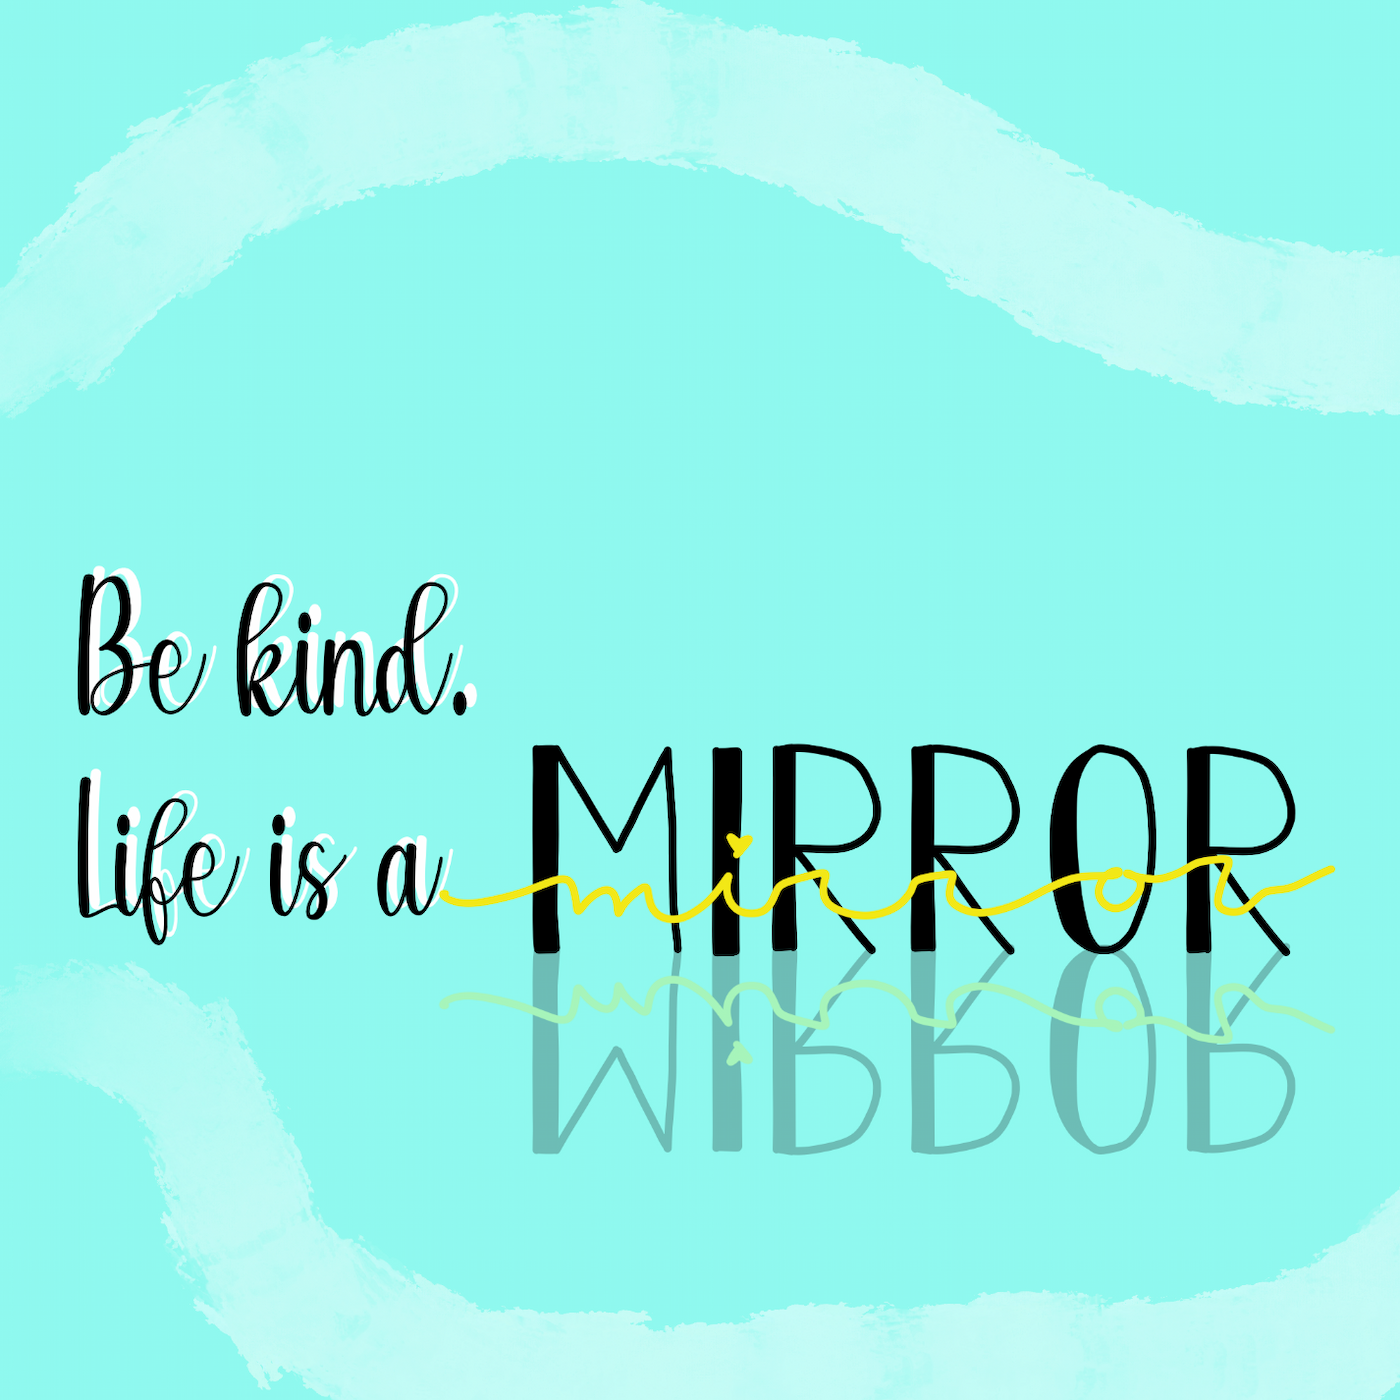 معنی جمله Be kind life is a mirror چیست؟